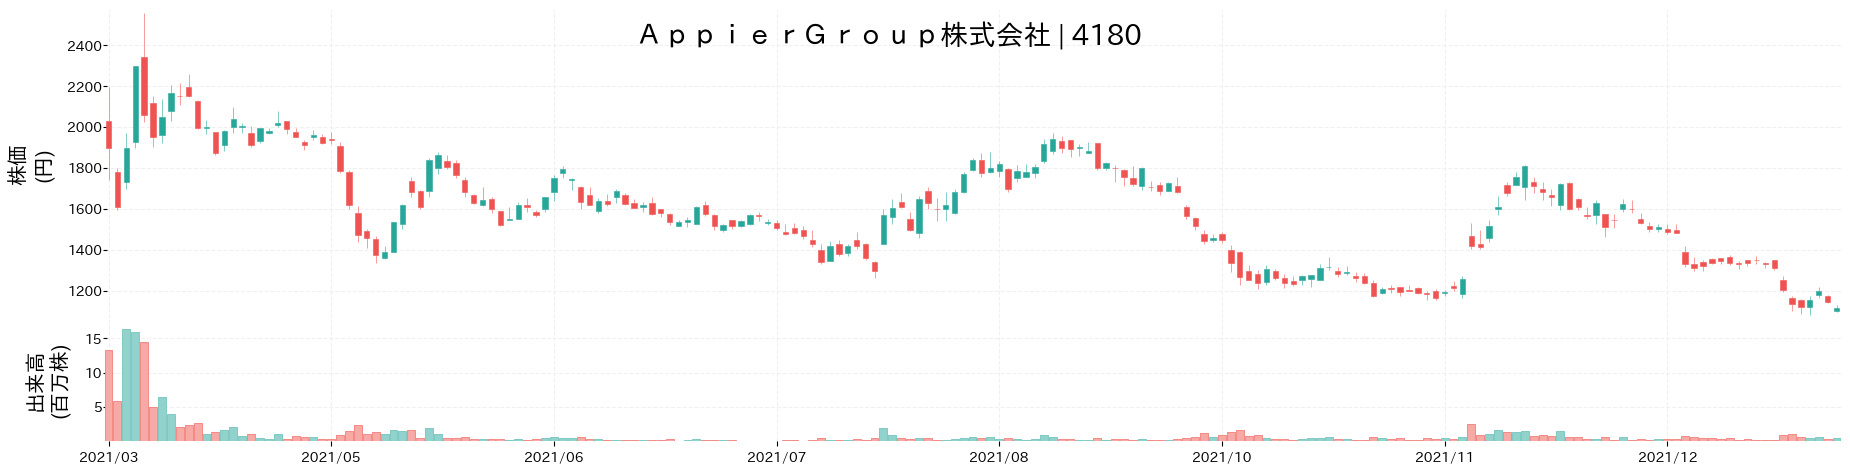 Appier Groupの株価推移(2021)